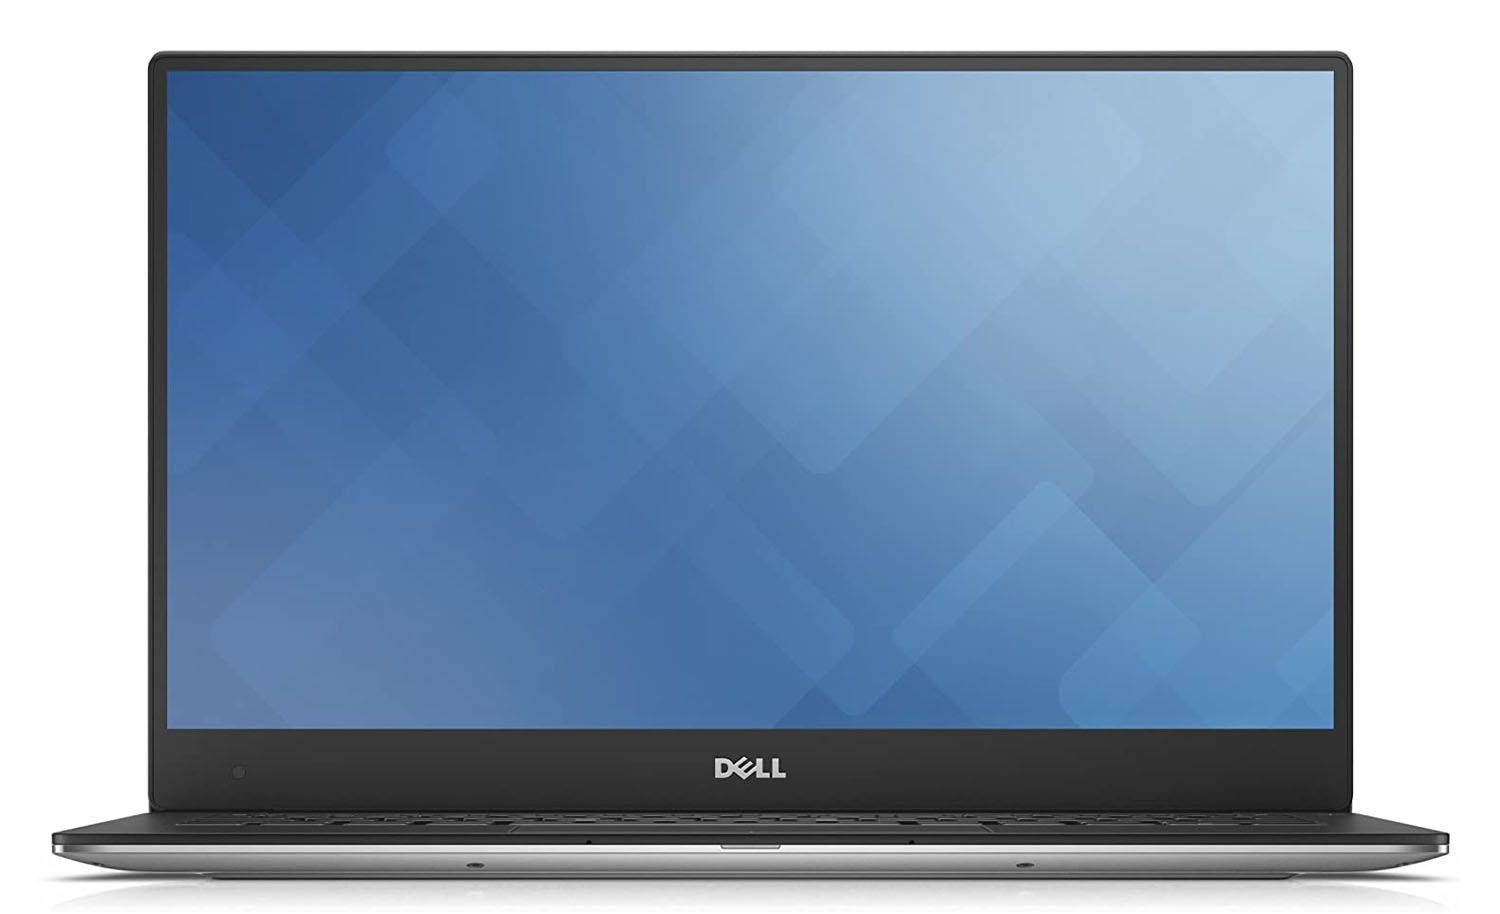 Dell XPS 13 9343 Intel Core i5 5th Gen 4GB RAM 128GB SSD Windows 10 Home